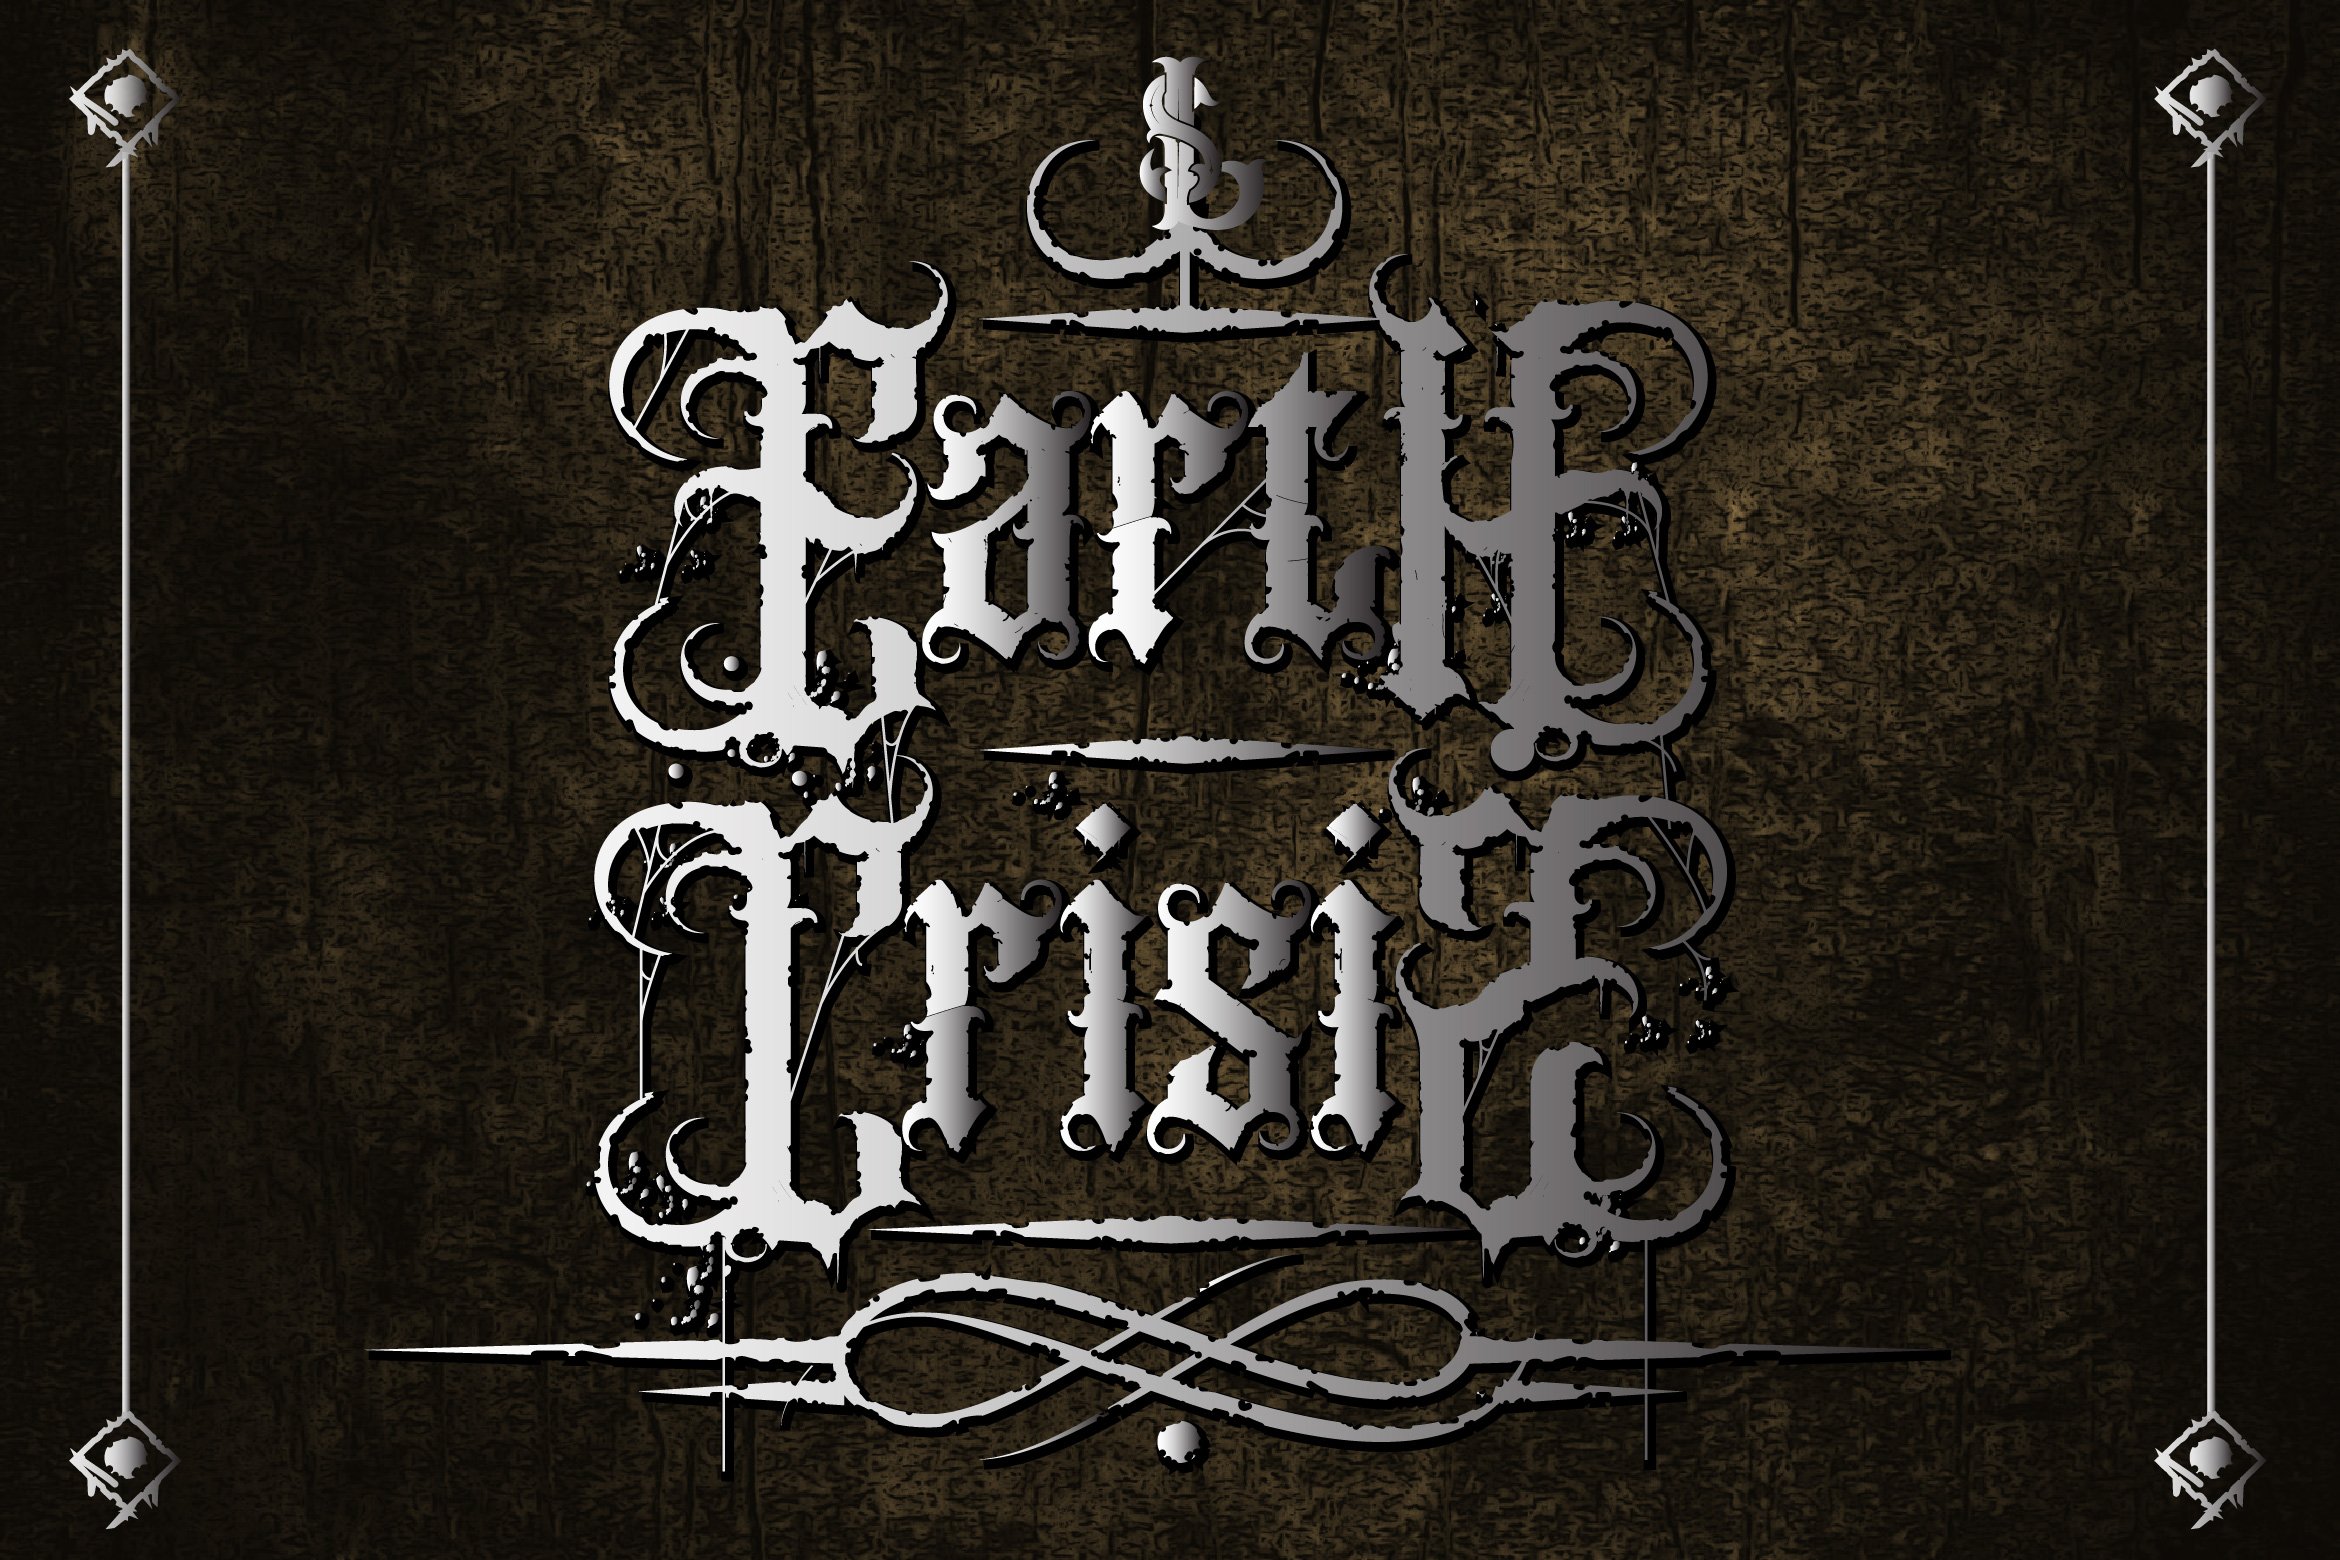 Earth Crisis | Blackmetal Font cover image.